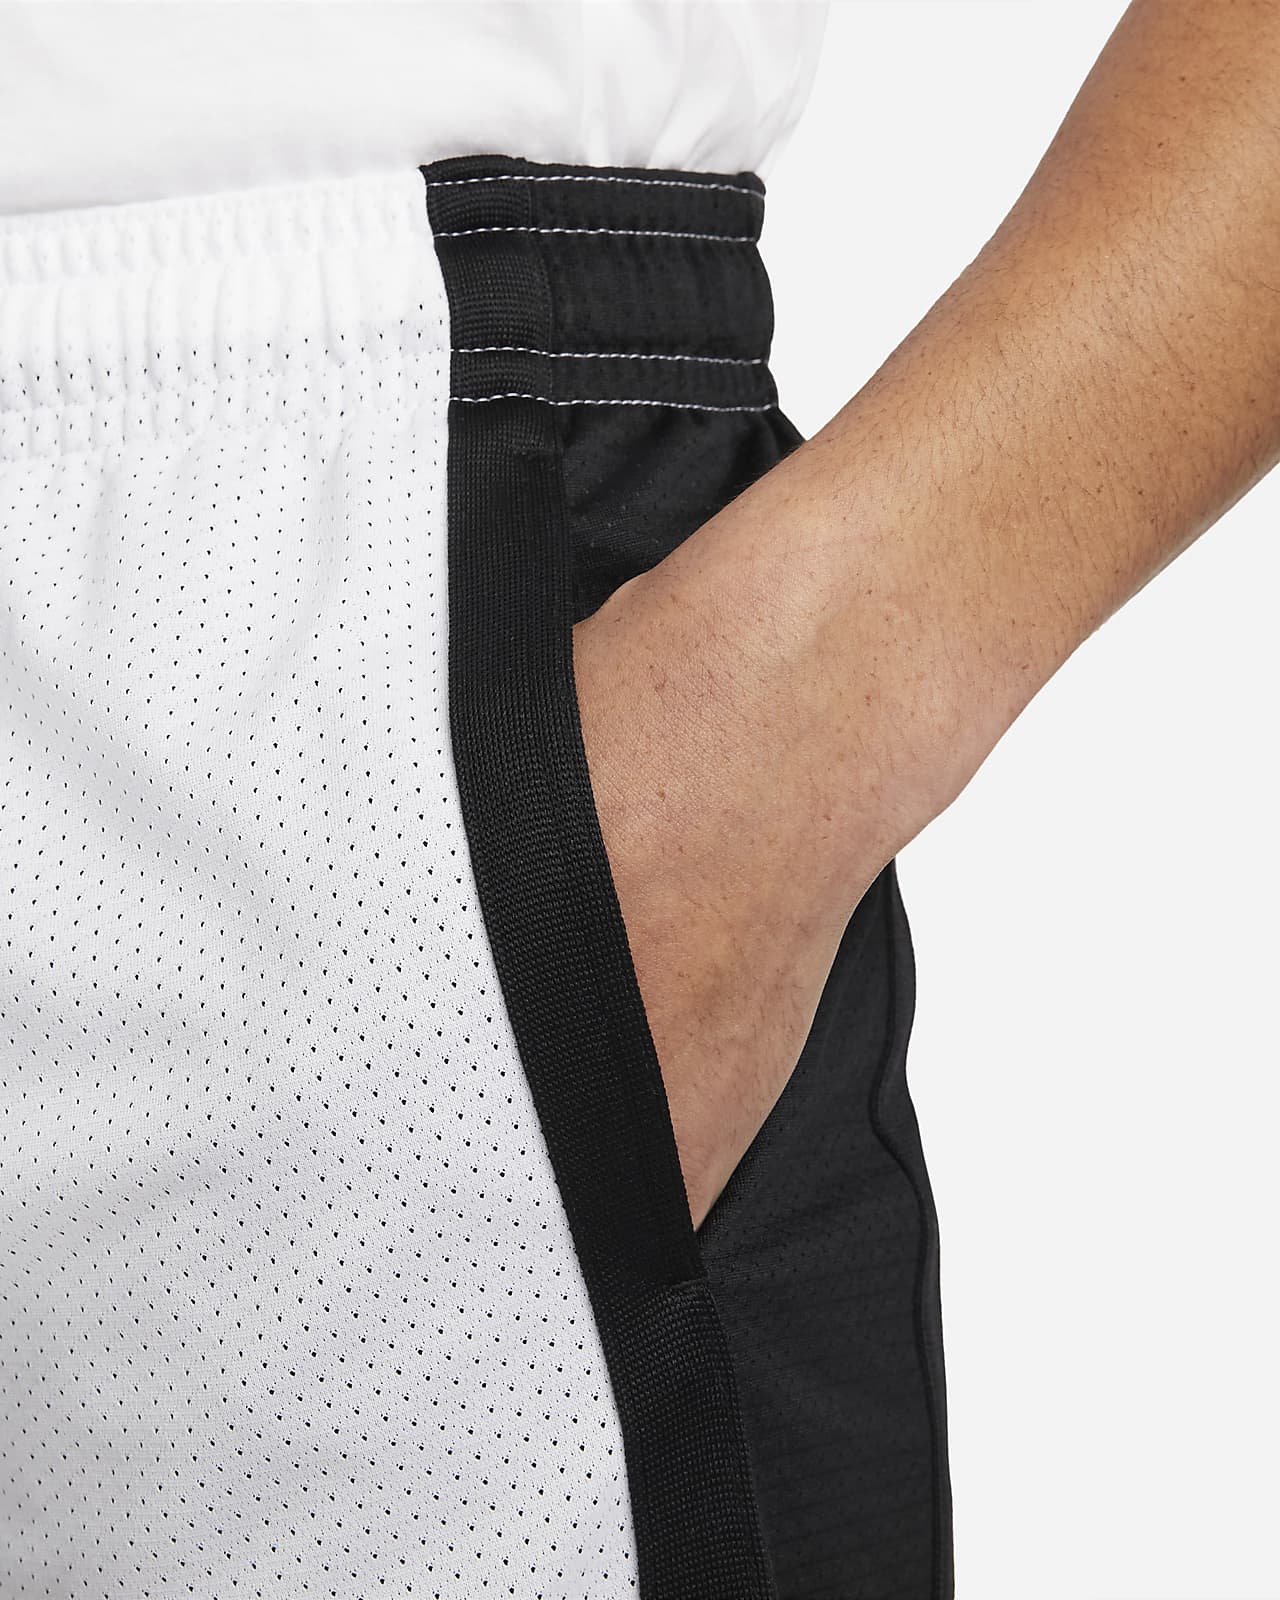 Jordan Men Dri-Fit Sport Shorts (Gym Red / Black / White / Black)